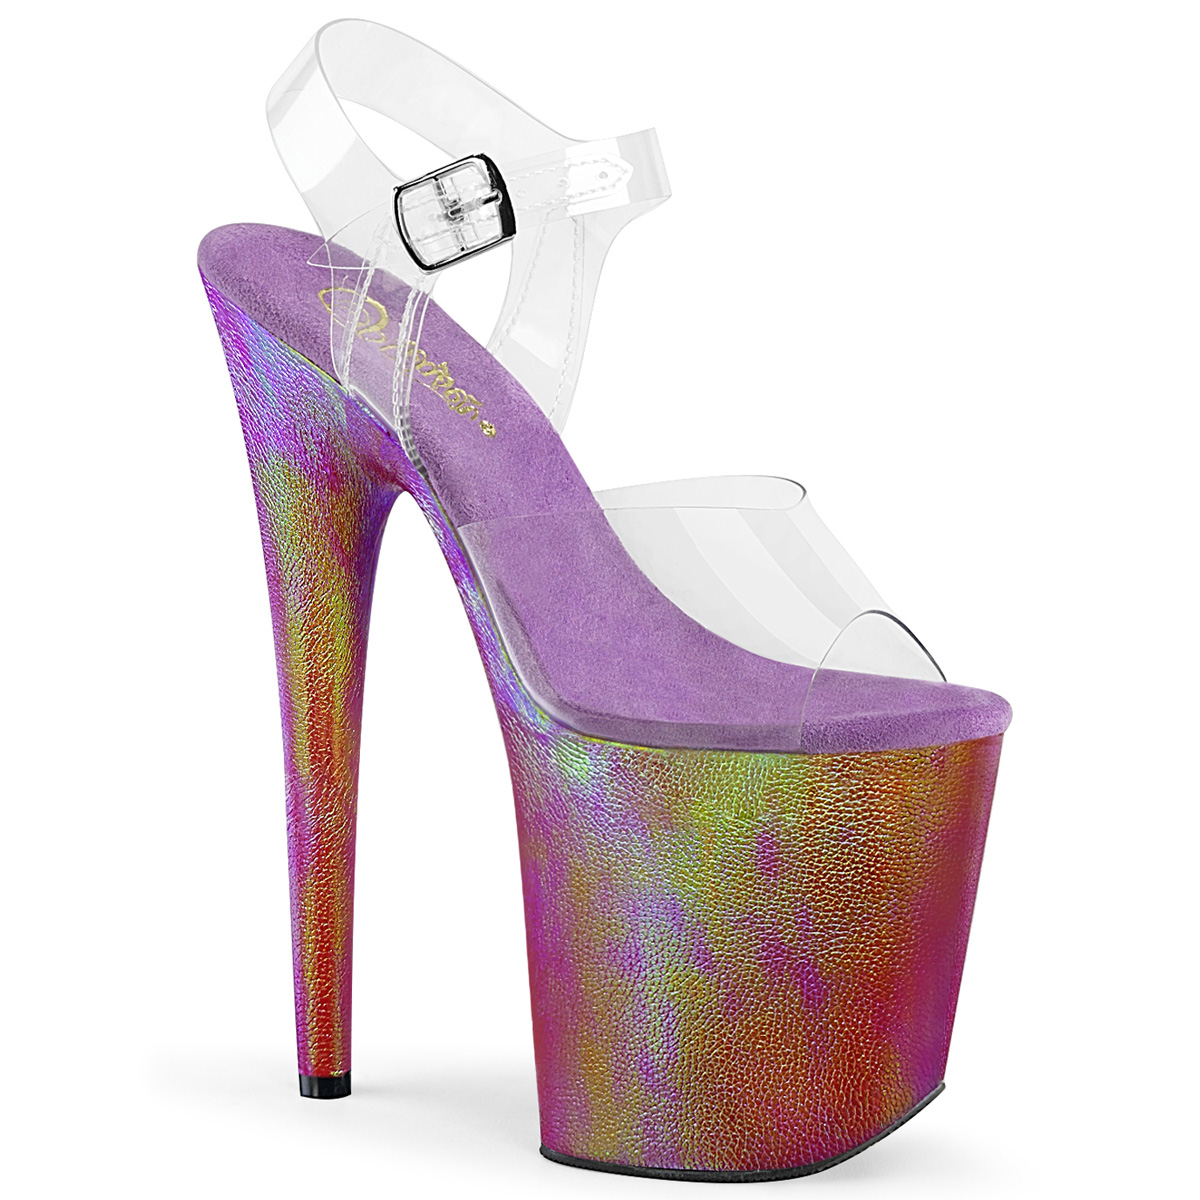 holographic platform heels